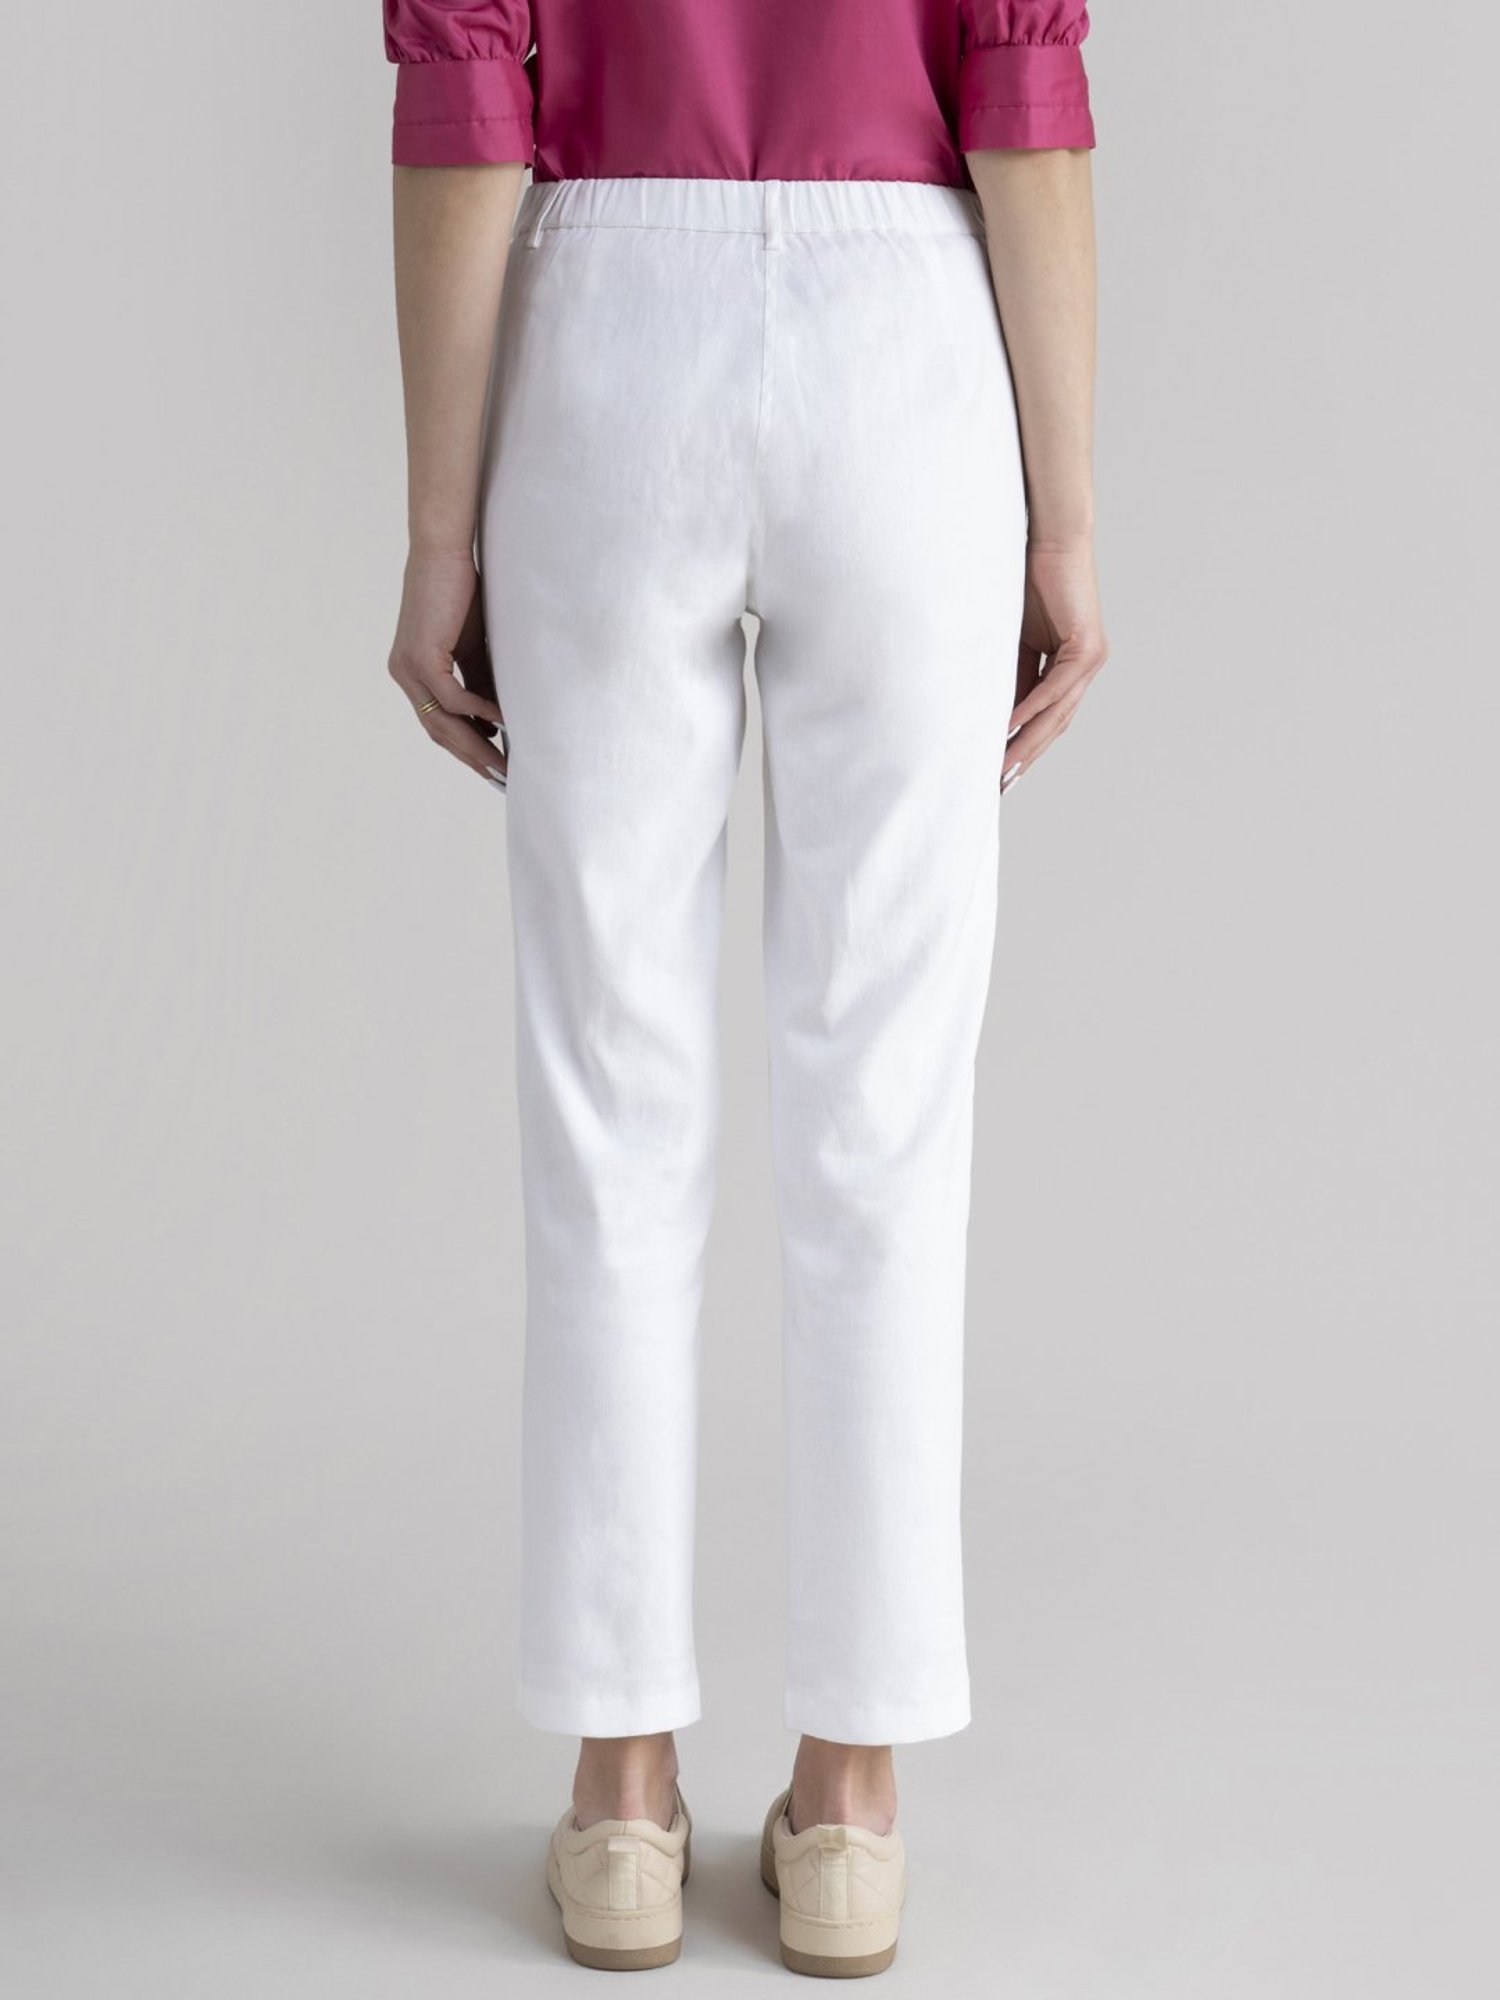 amalka.design SUE women's retro linen trousers with pockets |